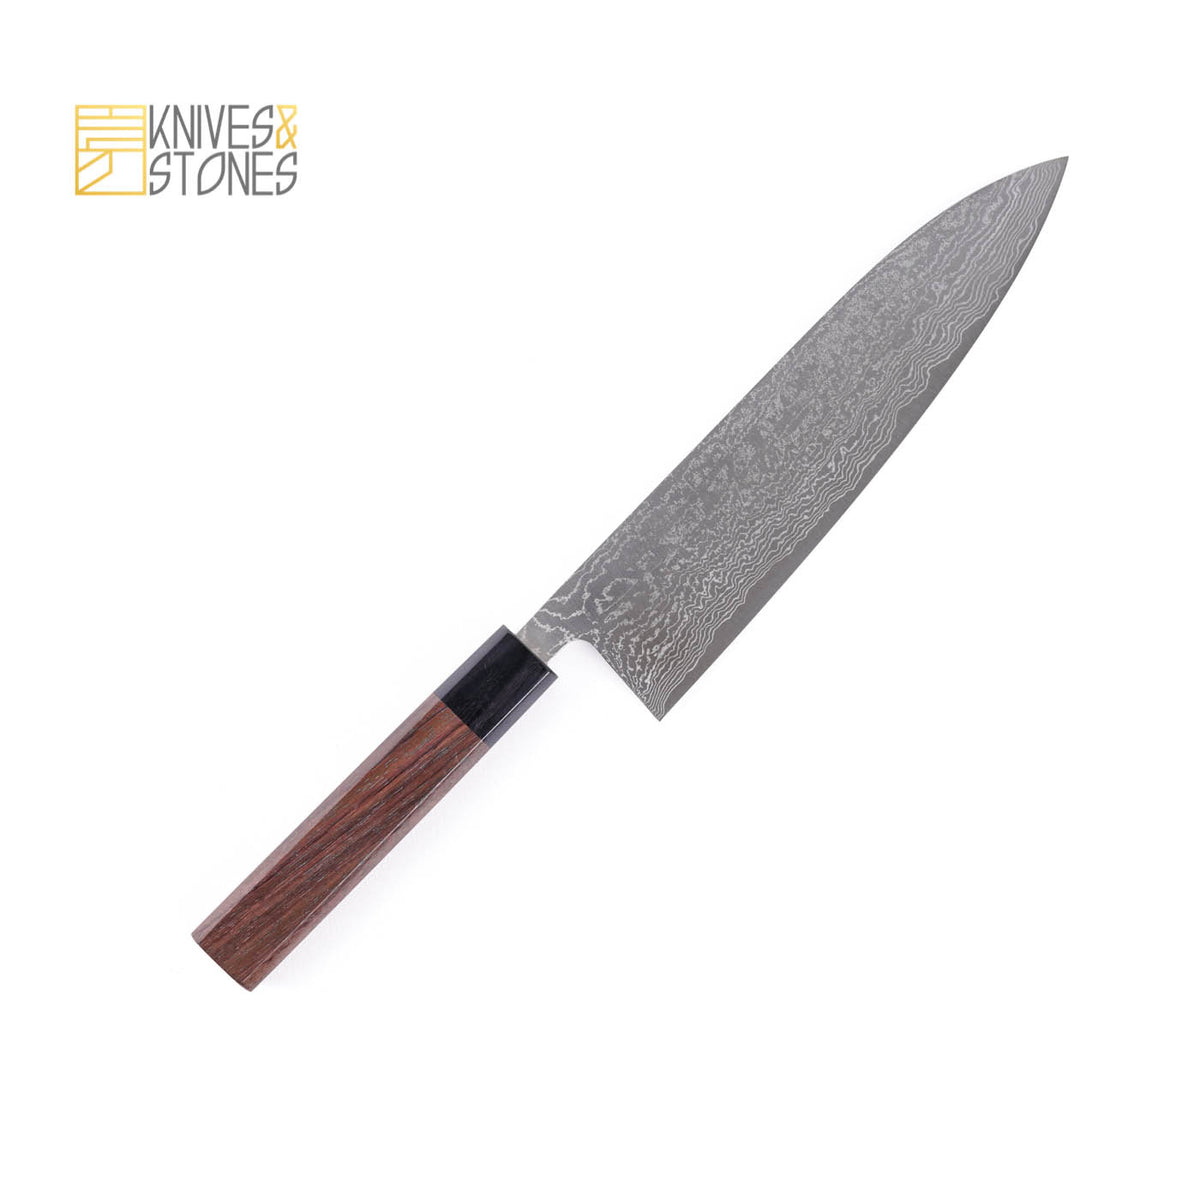 NKD Shibazi s210-2 : r/chefknives